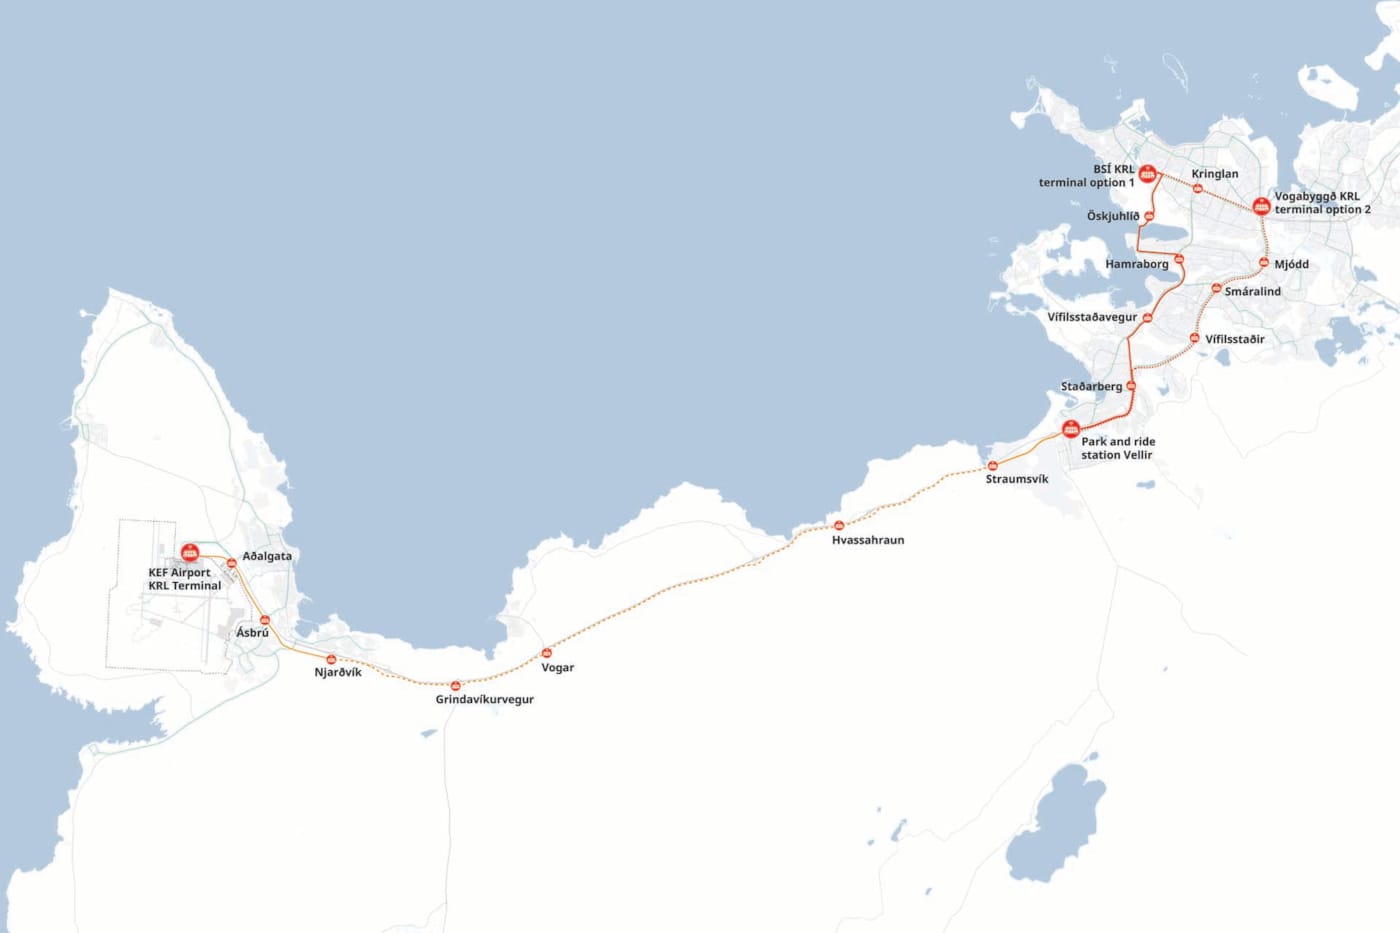 //www.kcap.eu/media/uploads/21028_Keflavik Airport Area_Team KCAP_(c)MIC-KCAP_Keflavík - Reykjavík Link site plan with locations of terminal and intermediate stations_LR.jpg